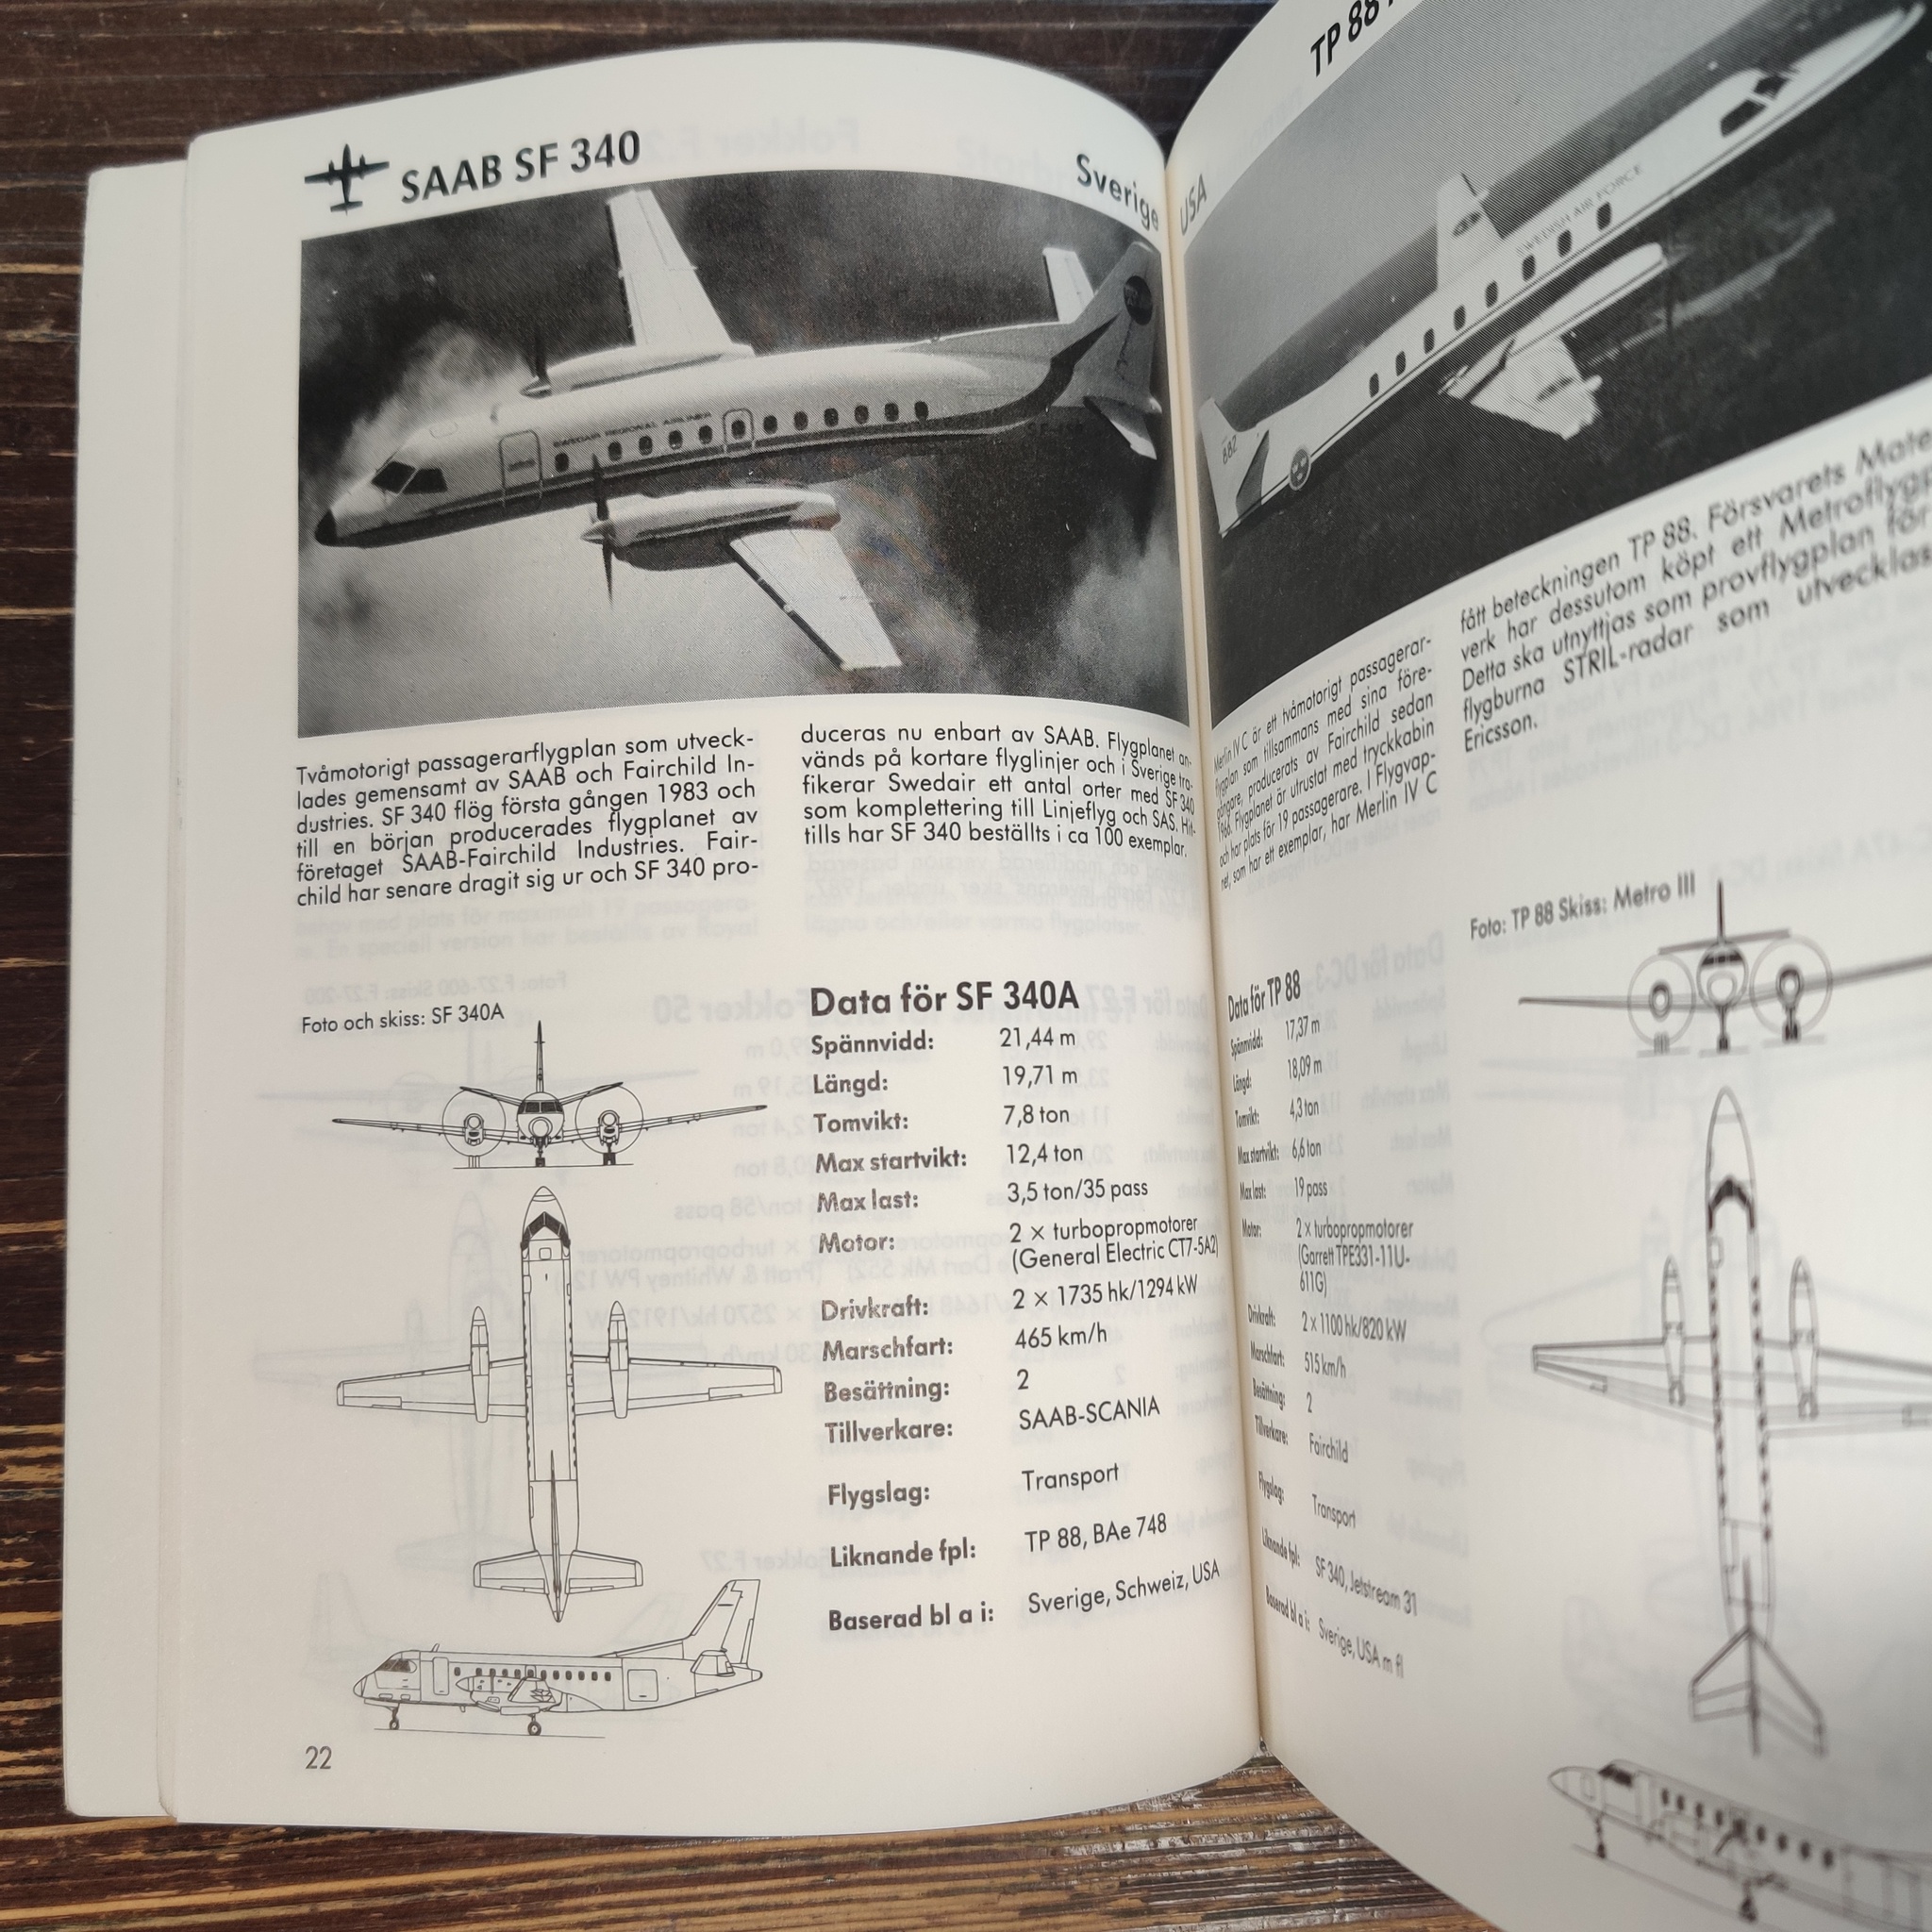 Flygplan KORT  - Tryckt 1987